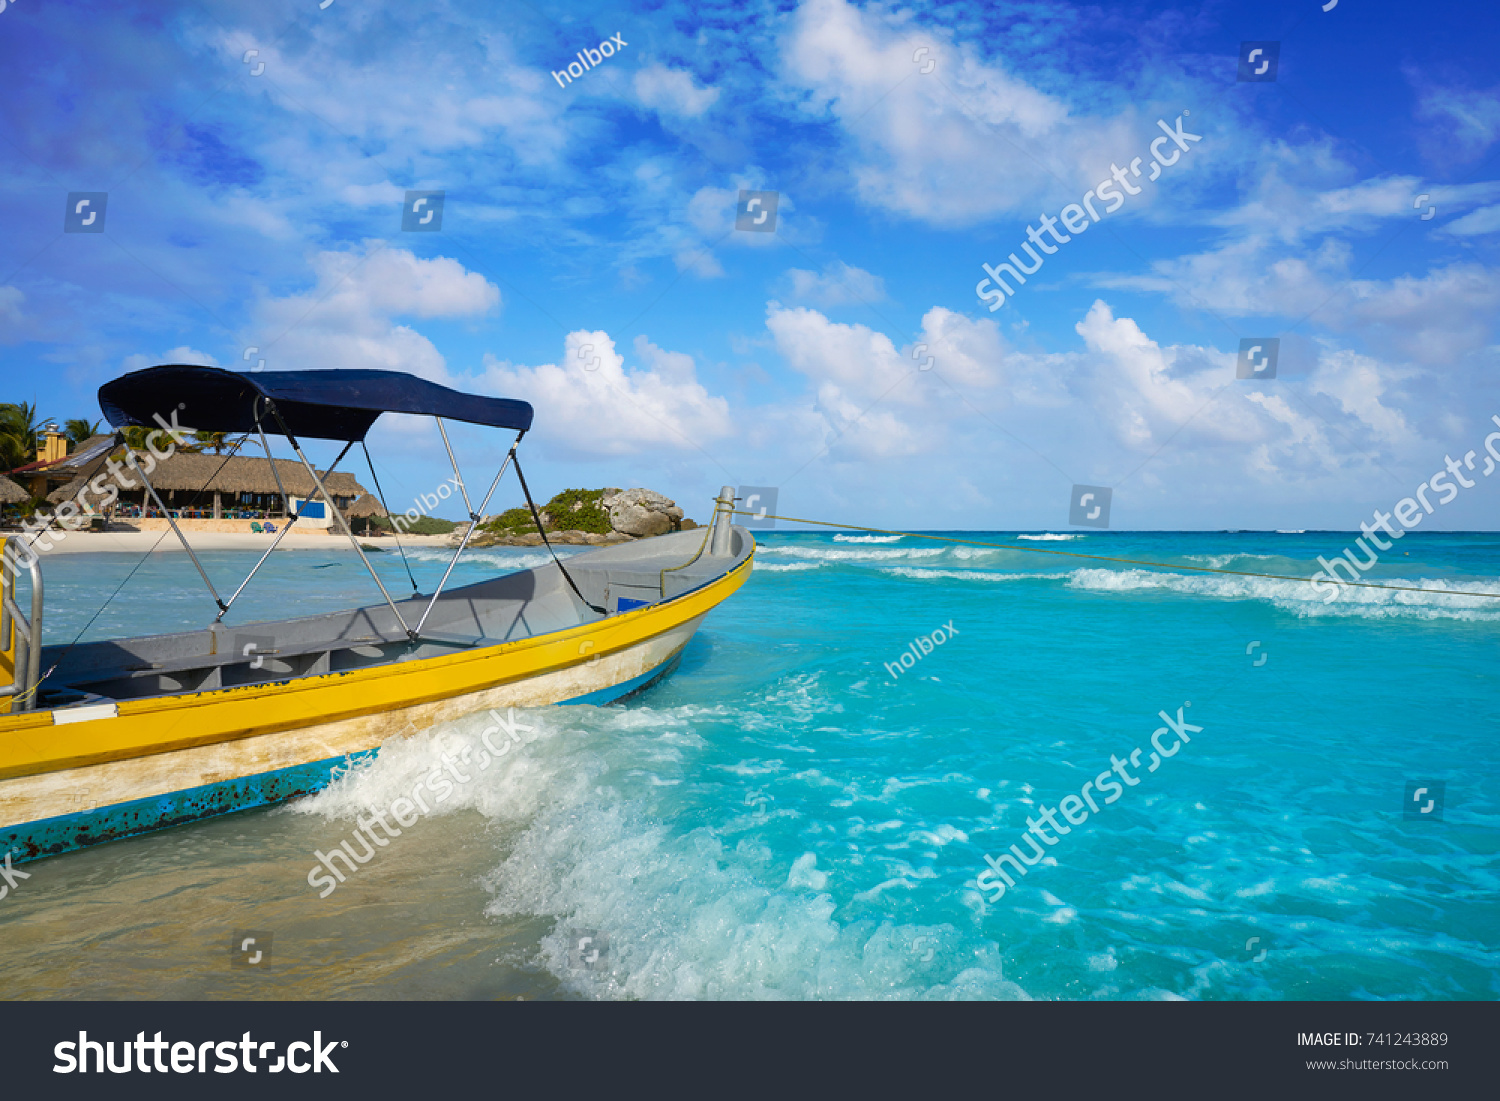 Tulum Caribbean turquoise beach boat in Riviera Maya of Mayan Mexico #741243889